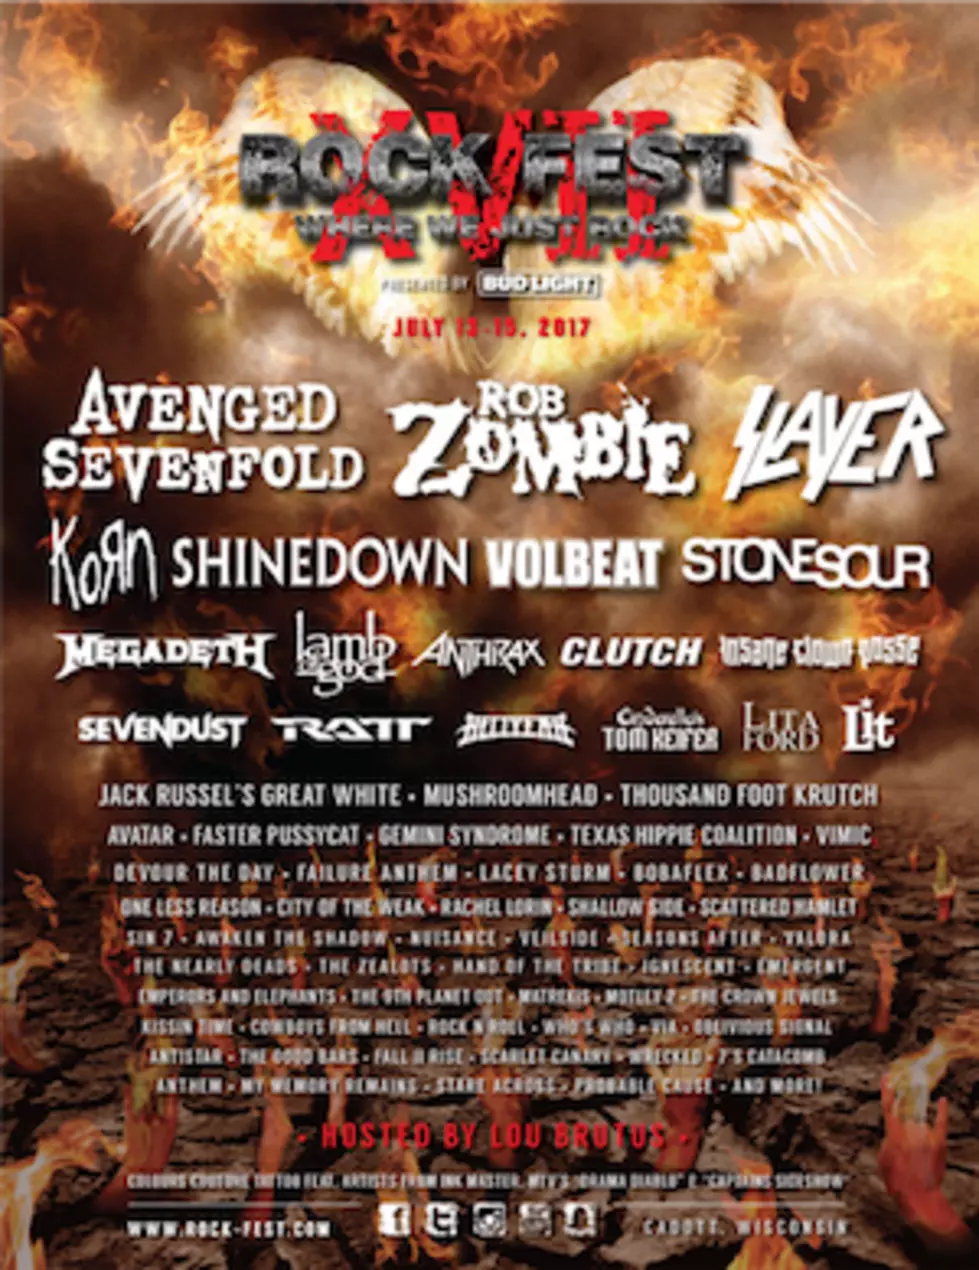 Avenged Sevenfold, Rob Zombie, Slayer to Headline Rock Fest